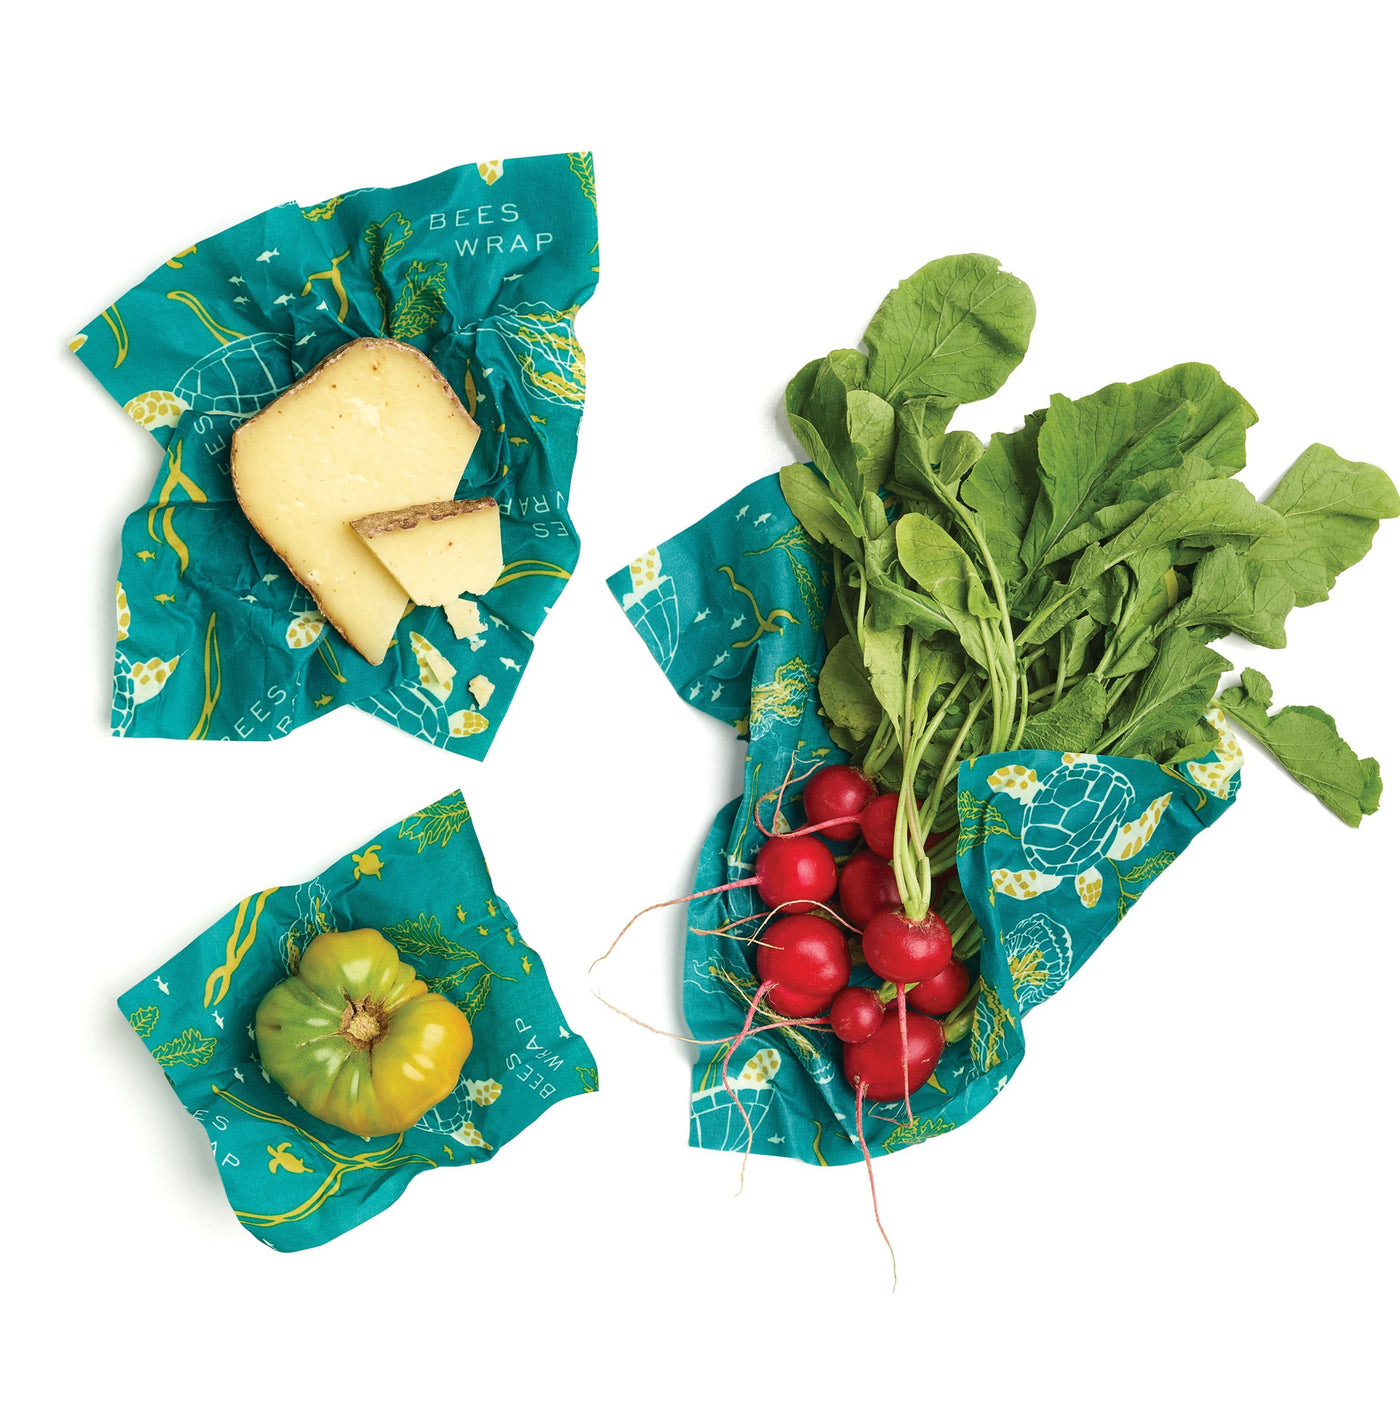 Natural Beeswax Food Wrap, Manfore Reusable Biodegradable Wax Food